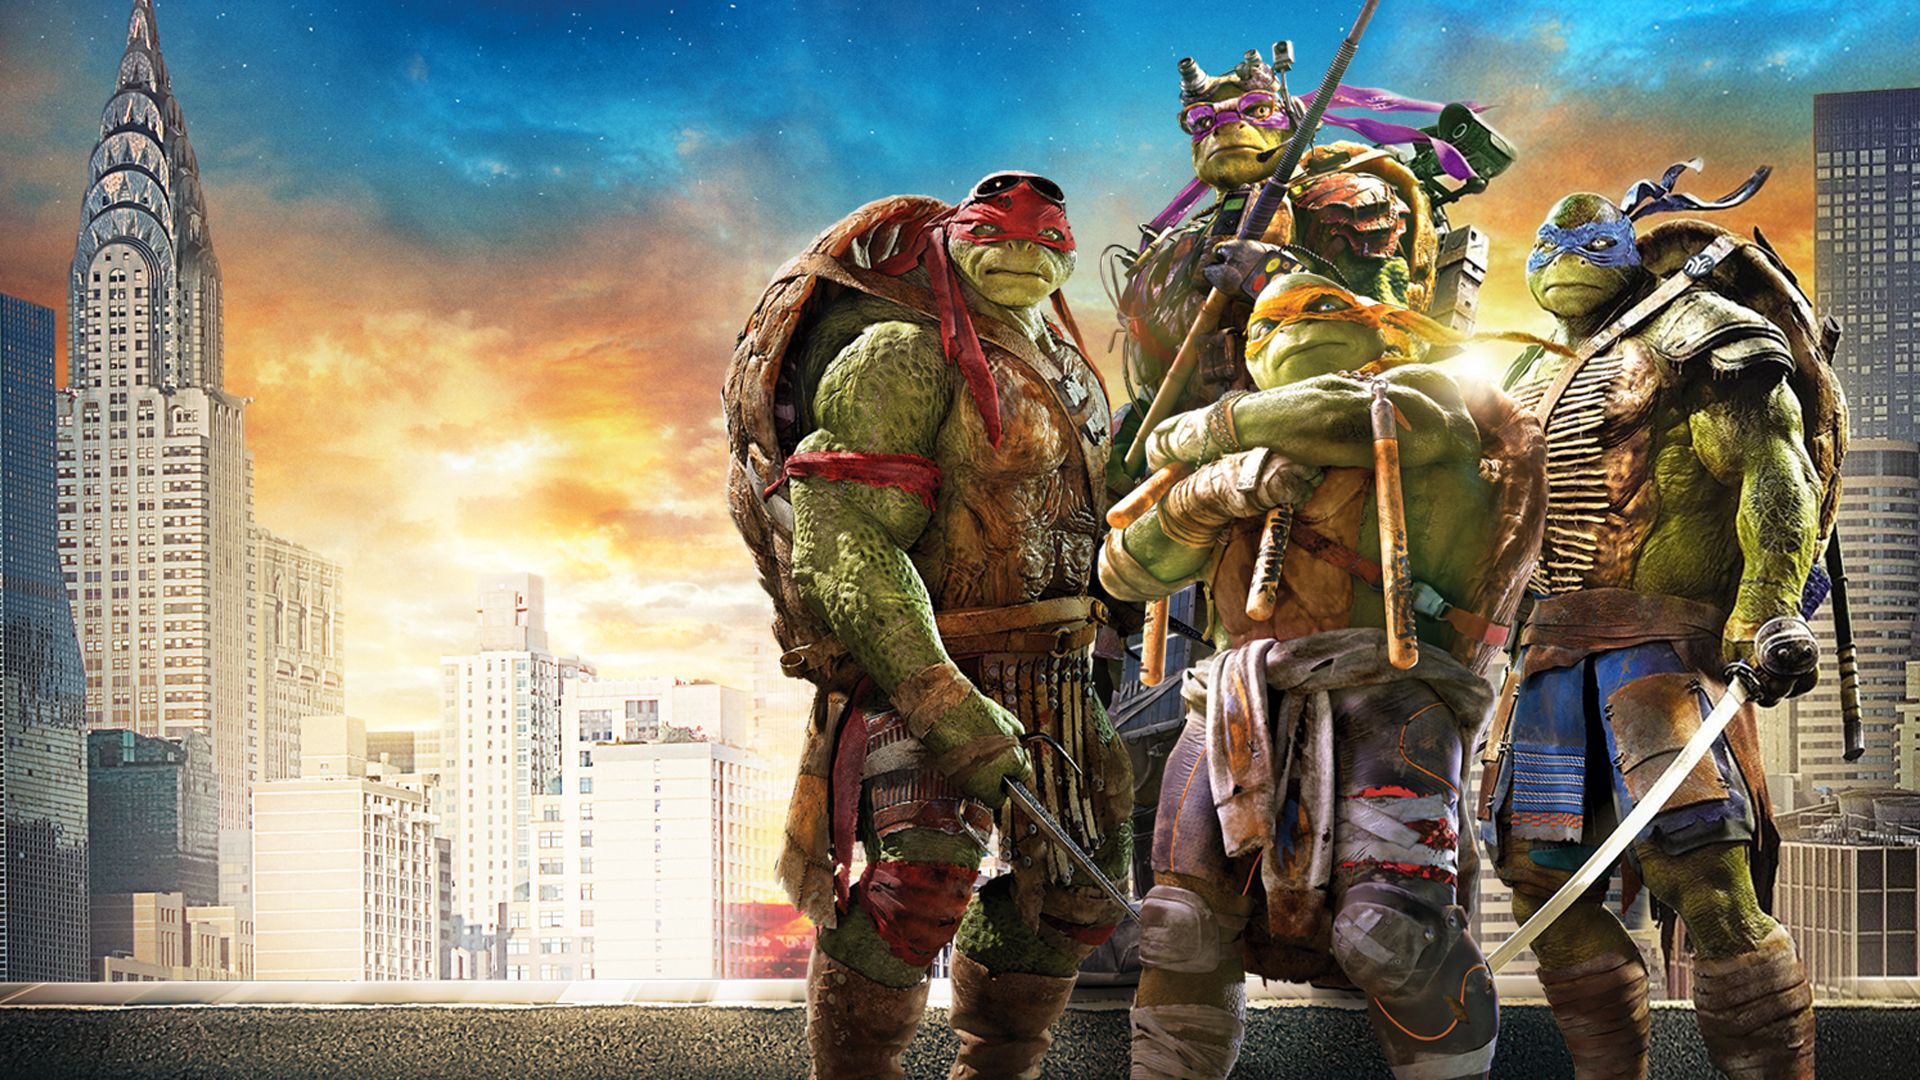 Teenage Mutant Ninja Turtles 2' Review